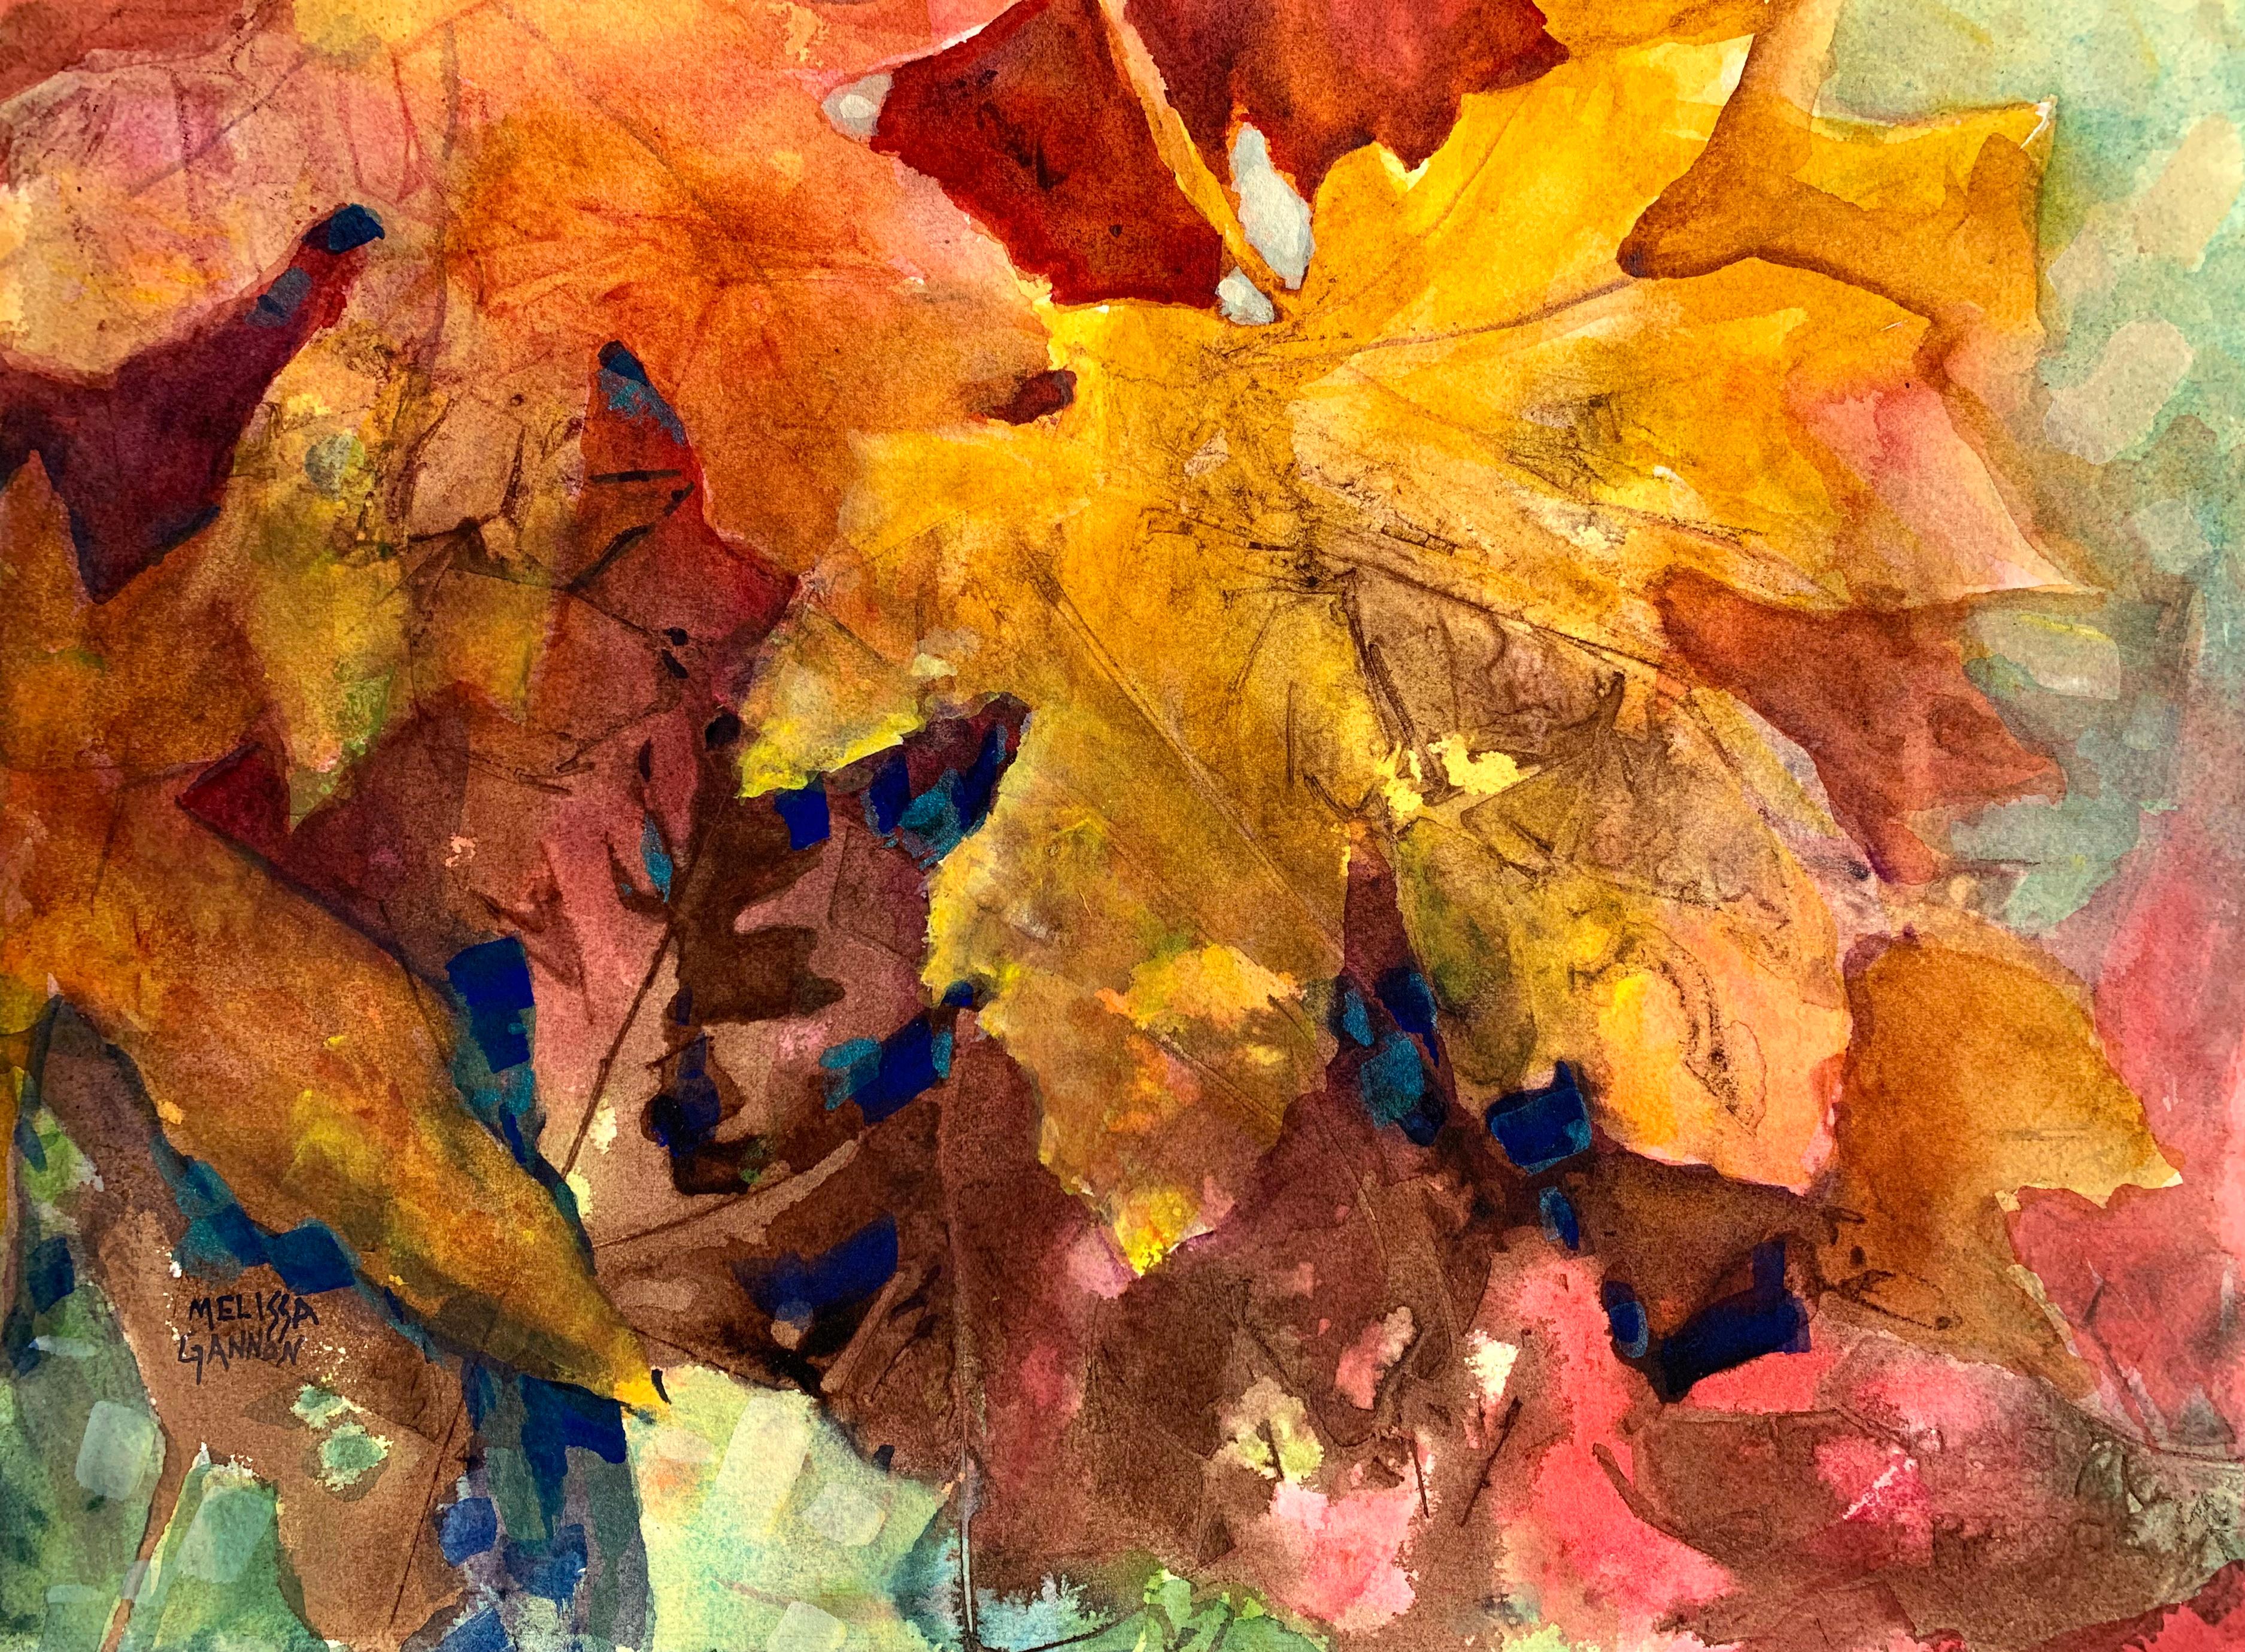 Magic & Leaves, Original Painting - Mixed Media Art by Melissa Gannon